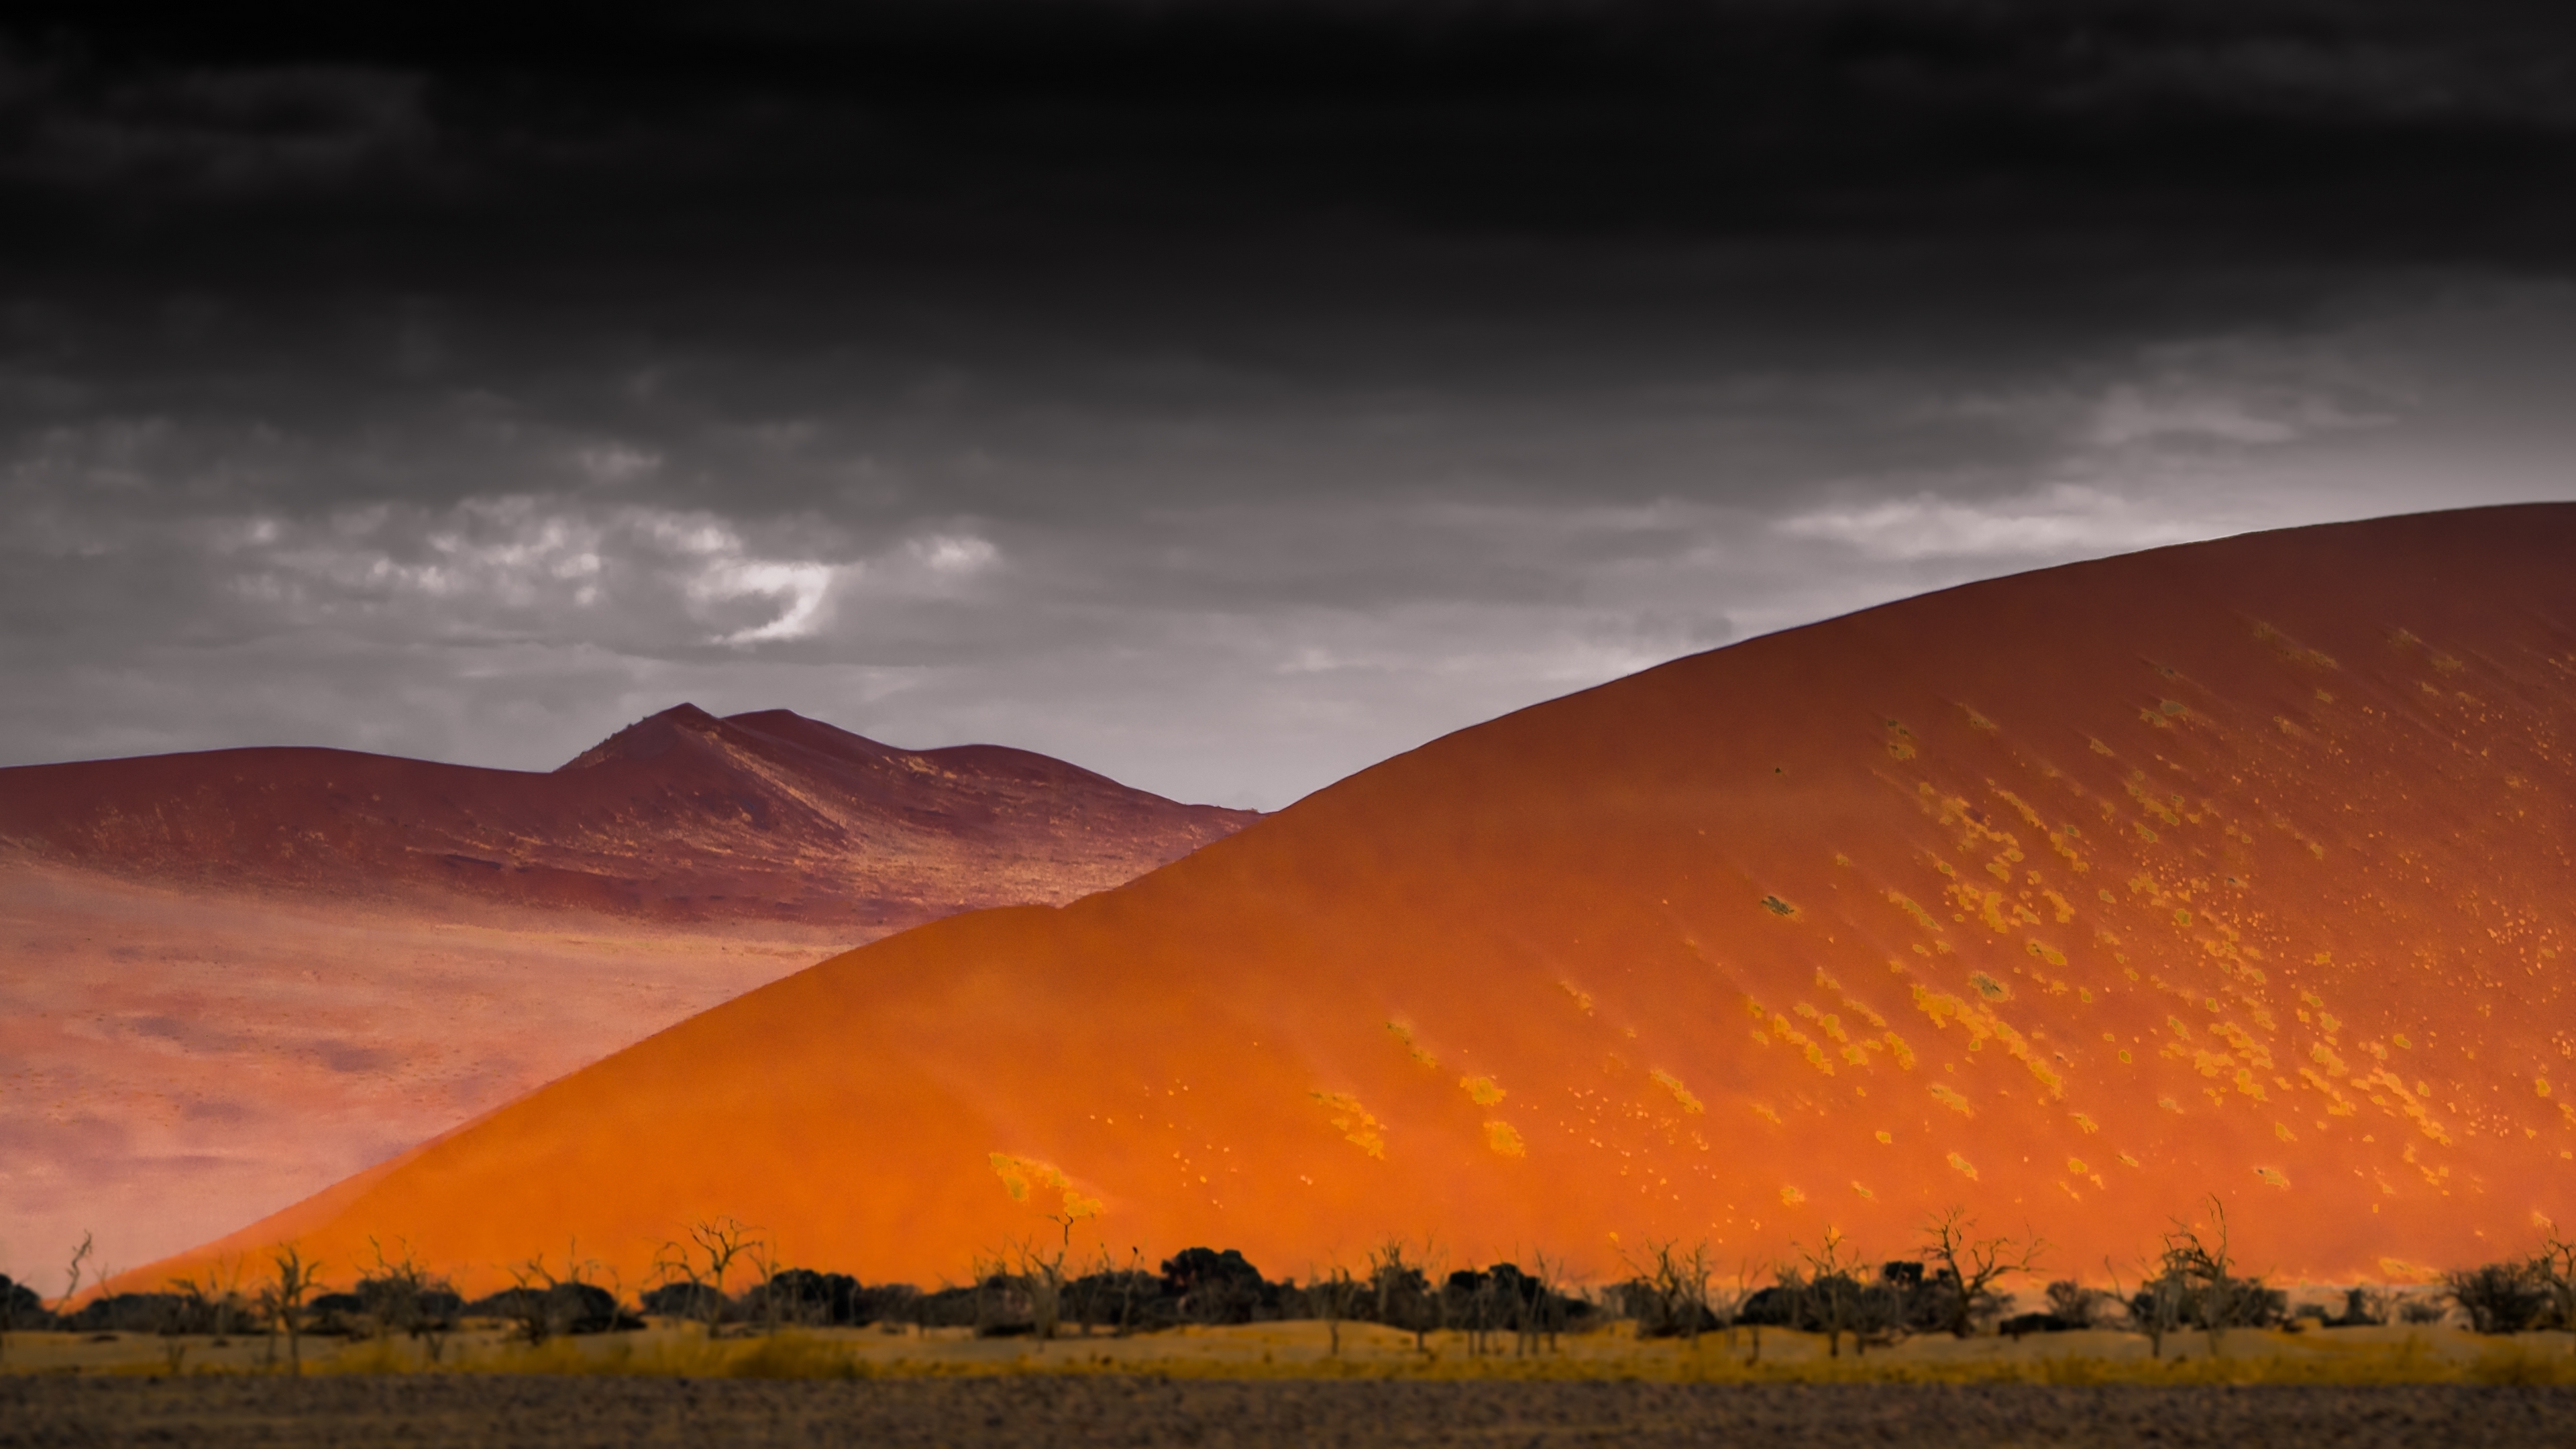 Atacama Desert for 3840 x 2160 Ultra HD resolution